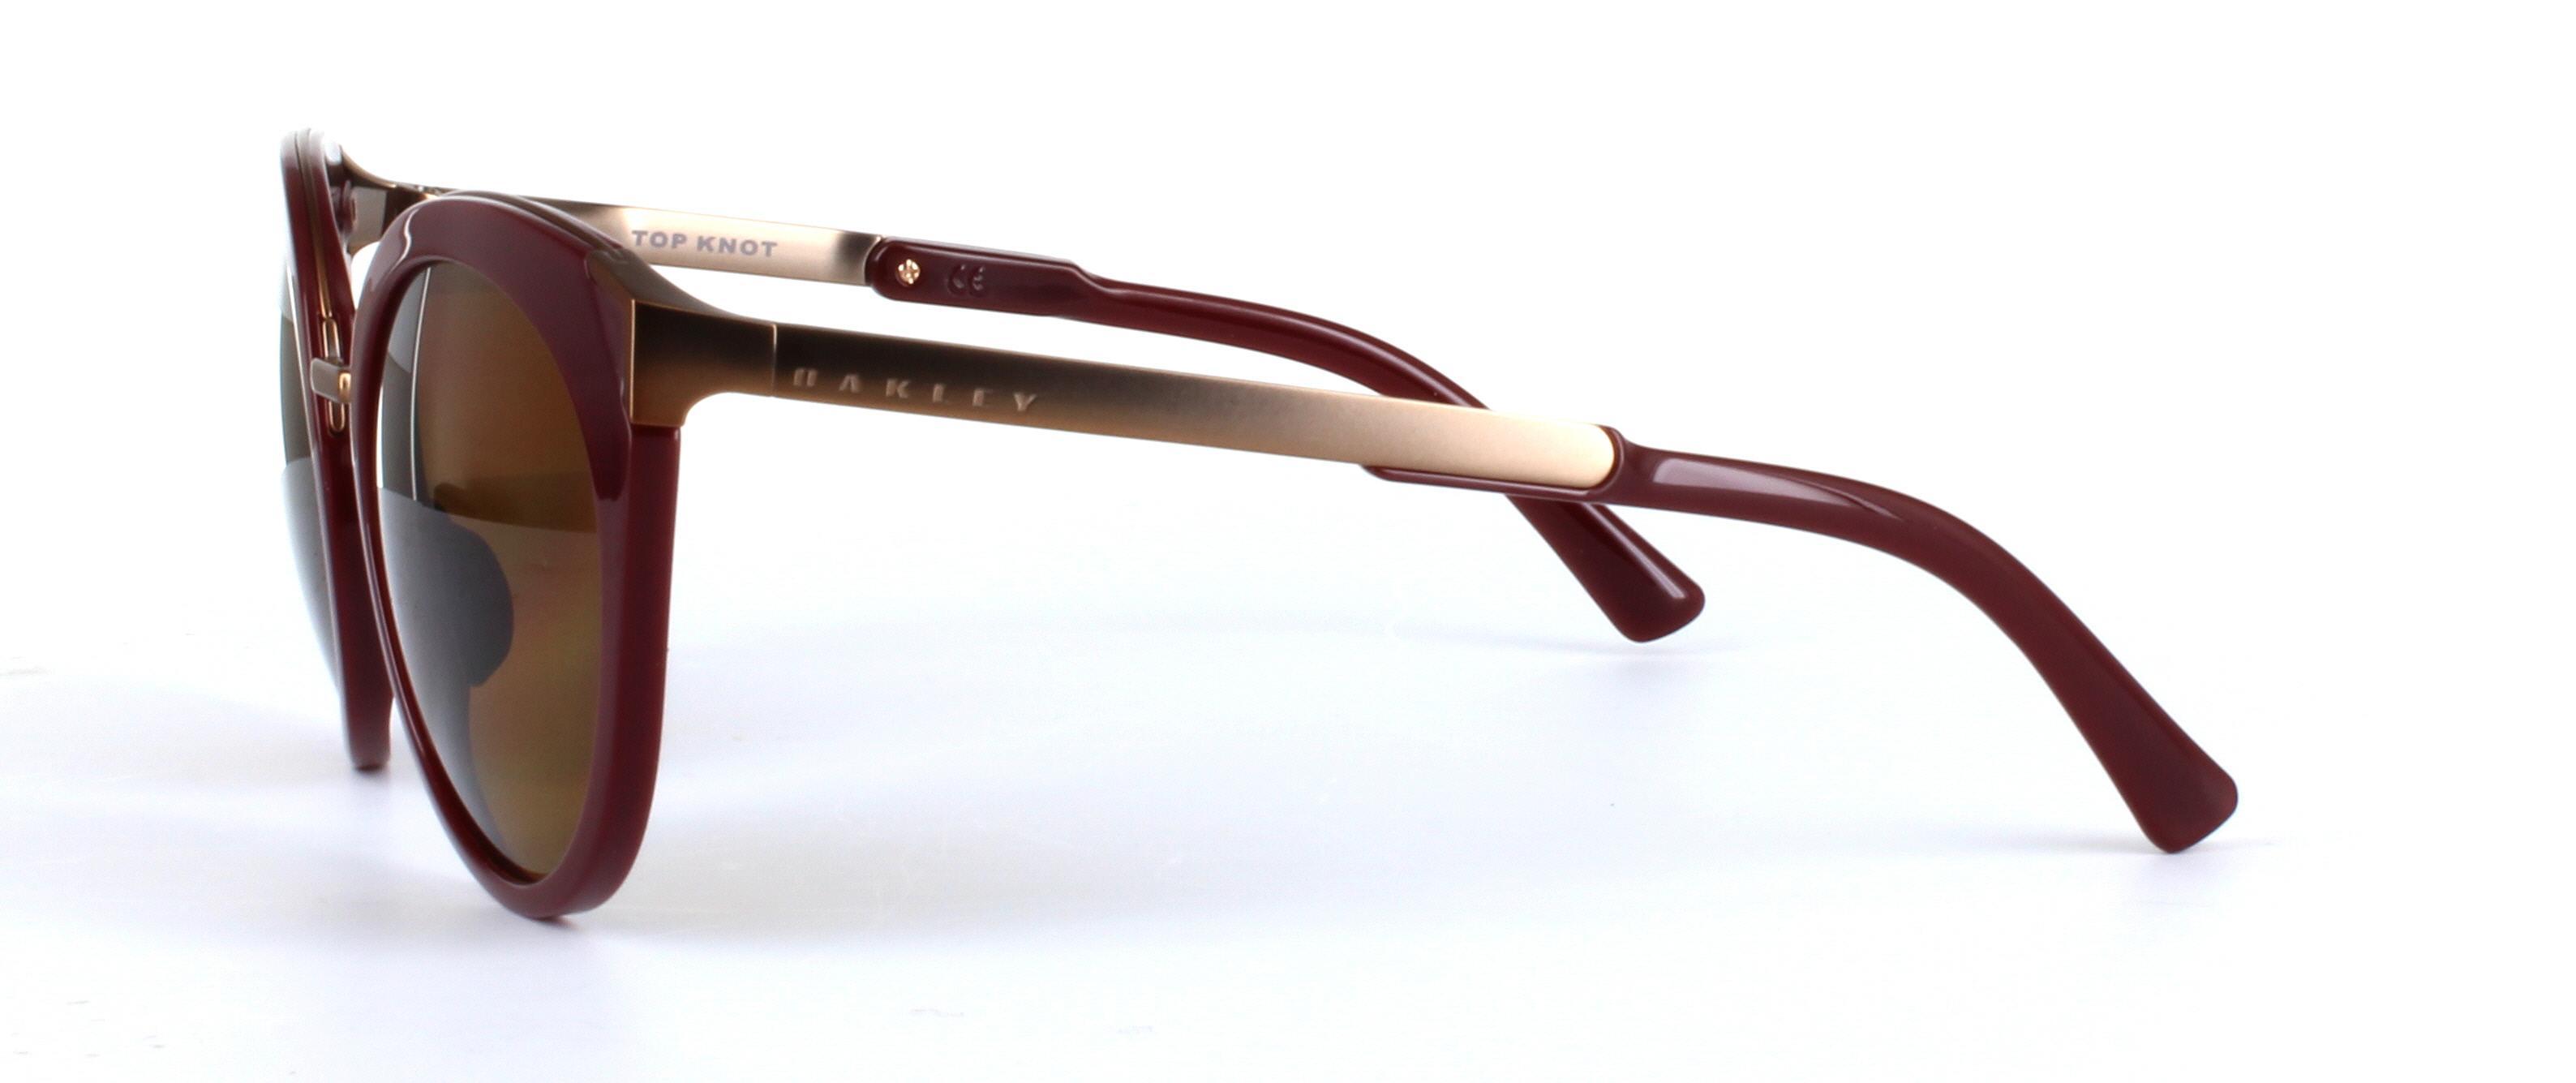 Oakley (O9434) Burgundy Full Rim Plastic Sunglasses - Image View 2